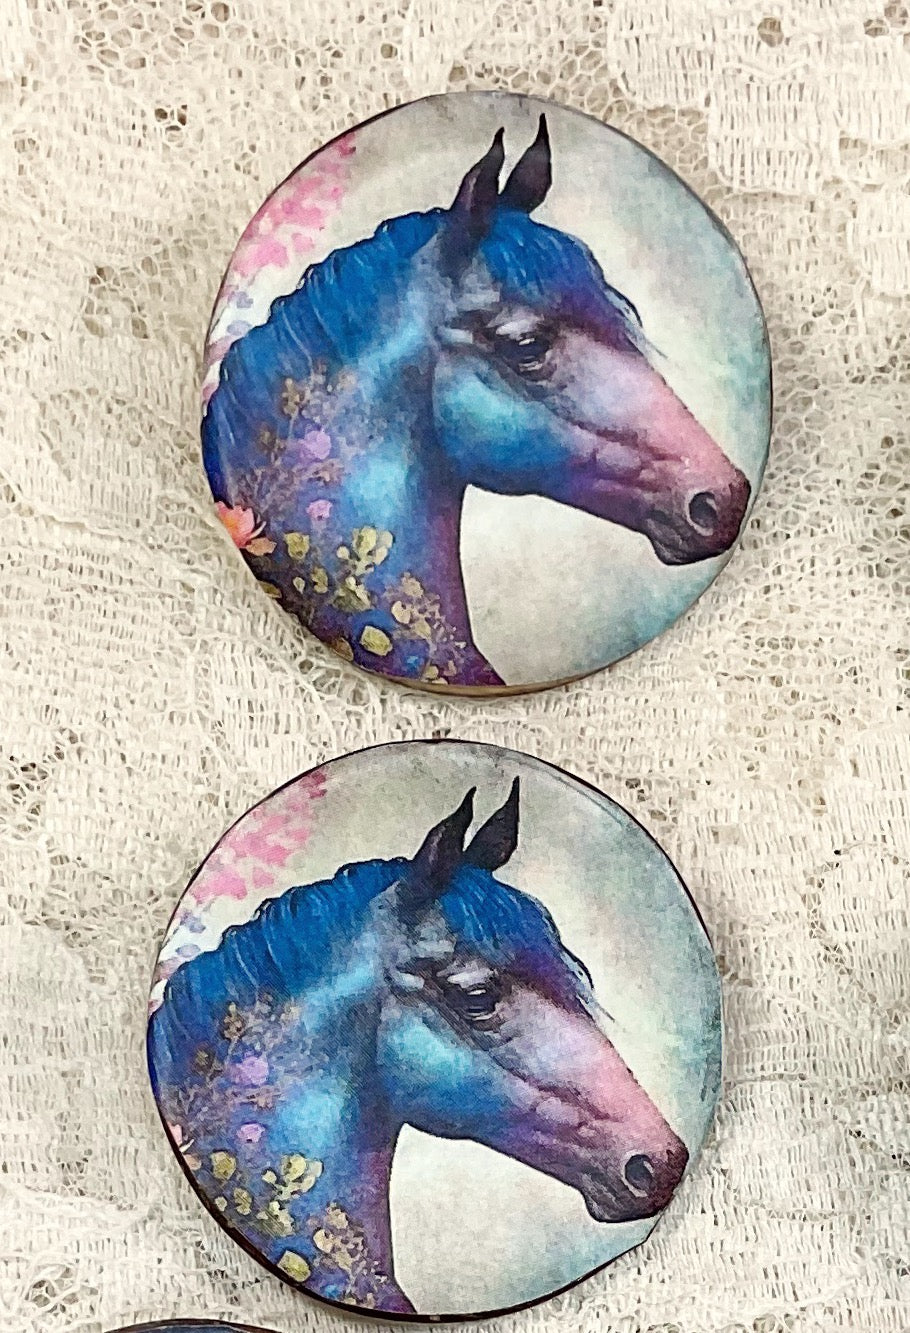 1.5” Horse pins Handcrafted Great Adirondack Yarn